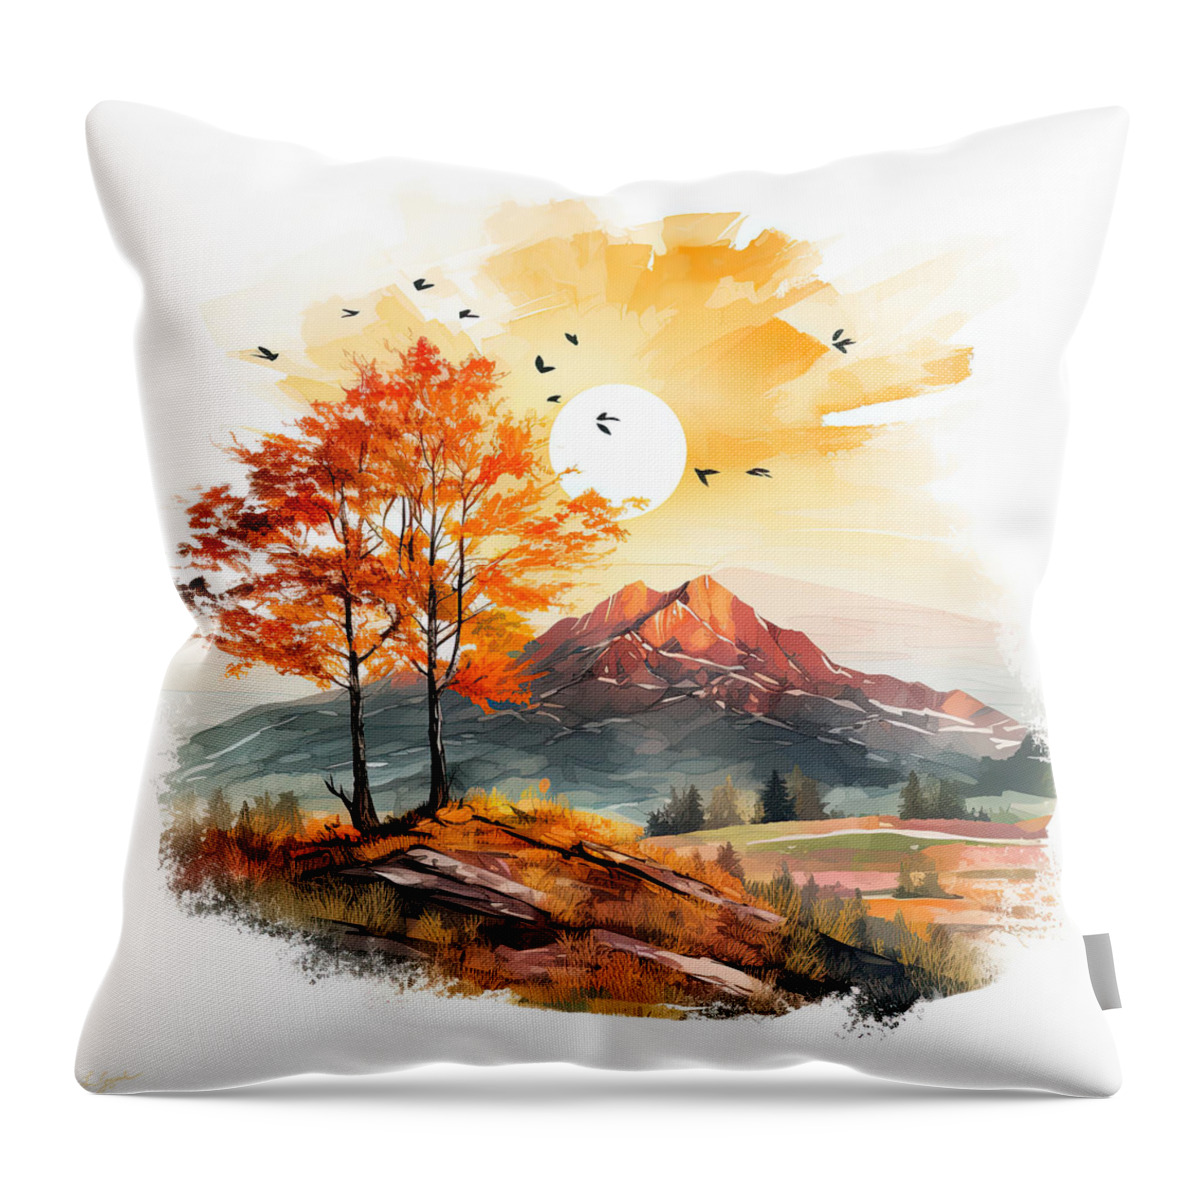 Four Seasons Throw Pillow featuring the digital art Fall Festiveness - Four Seasons of Color by Lourry Legarde